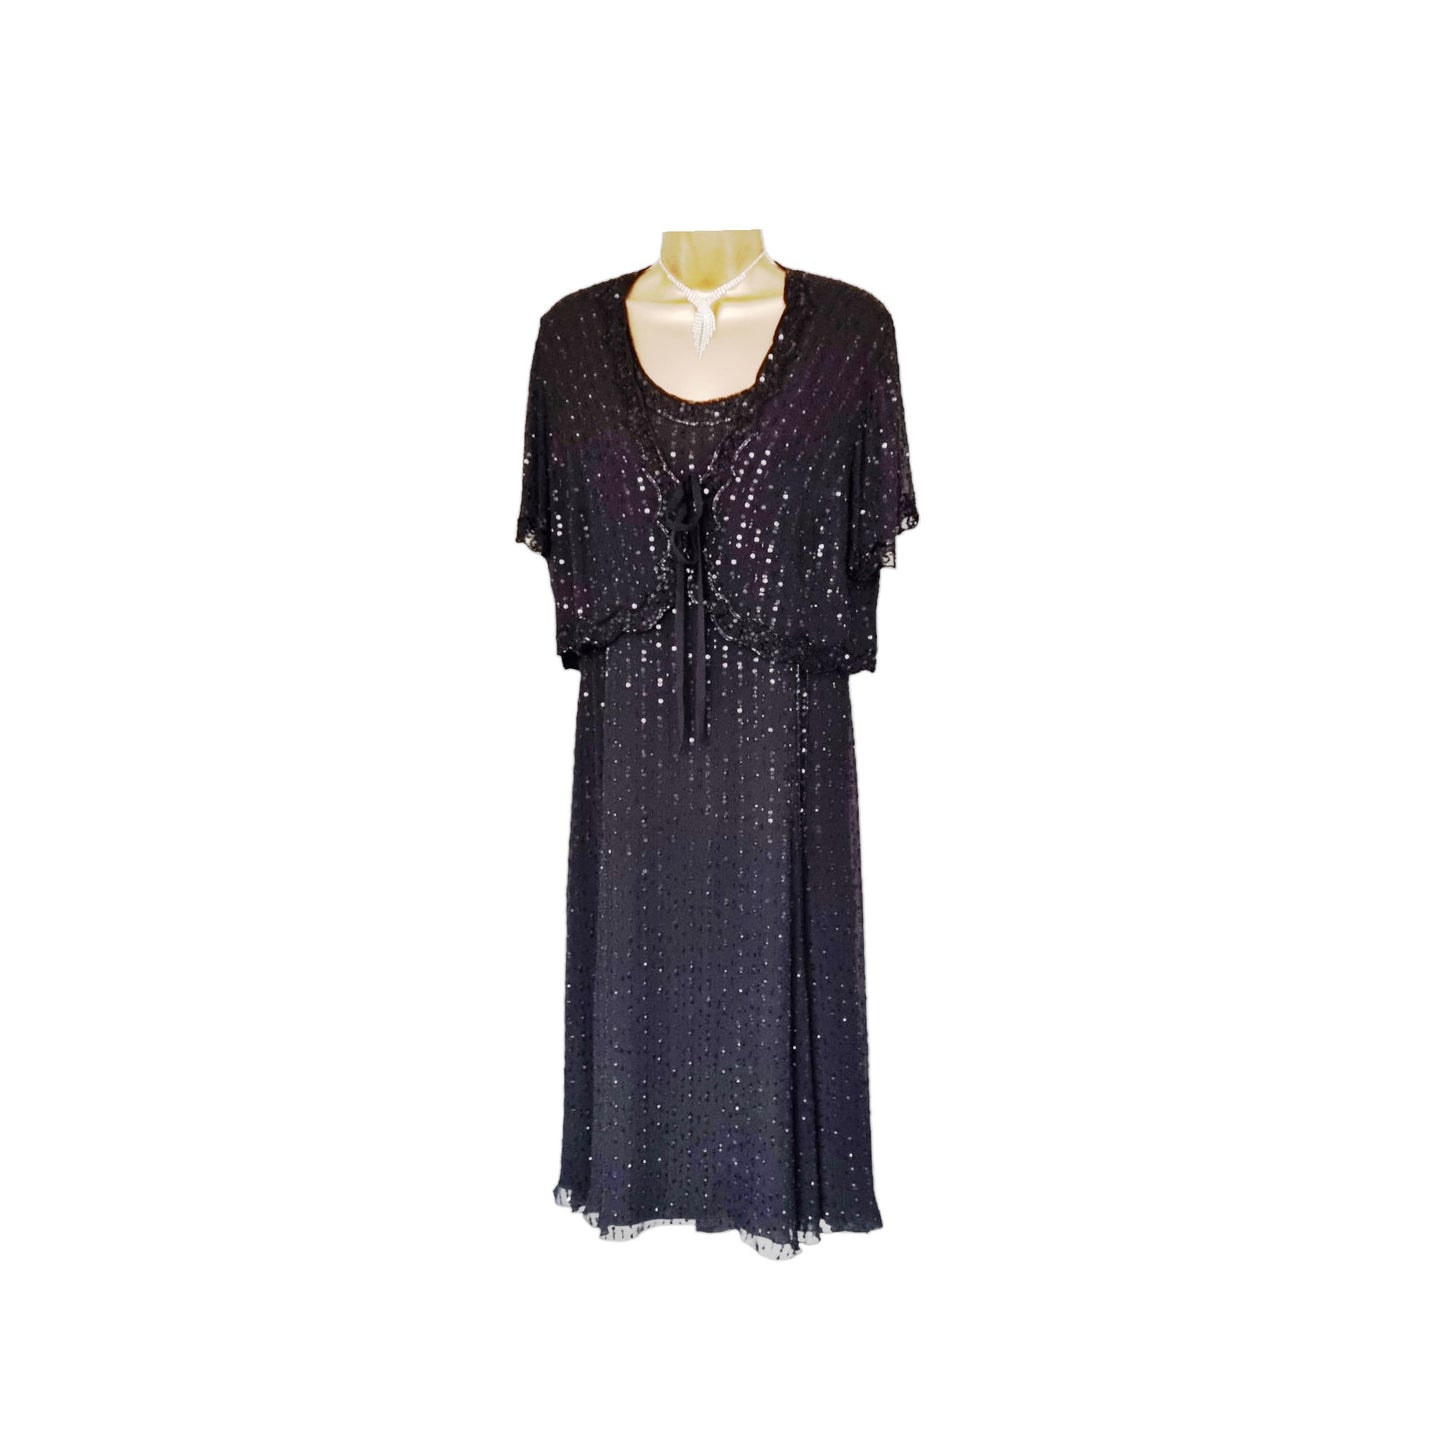 Caroline Charles Vintage Black Silk Sequin Dress & Bolero UK 16 US 12 EU 44 IT 48 Timeless Fashions